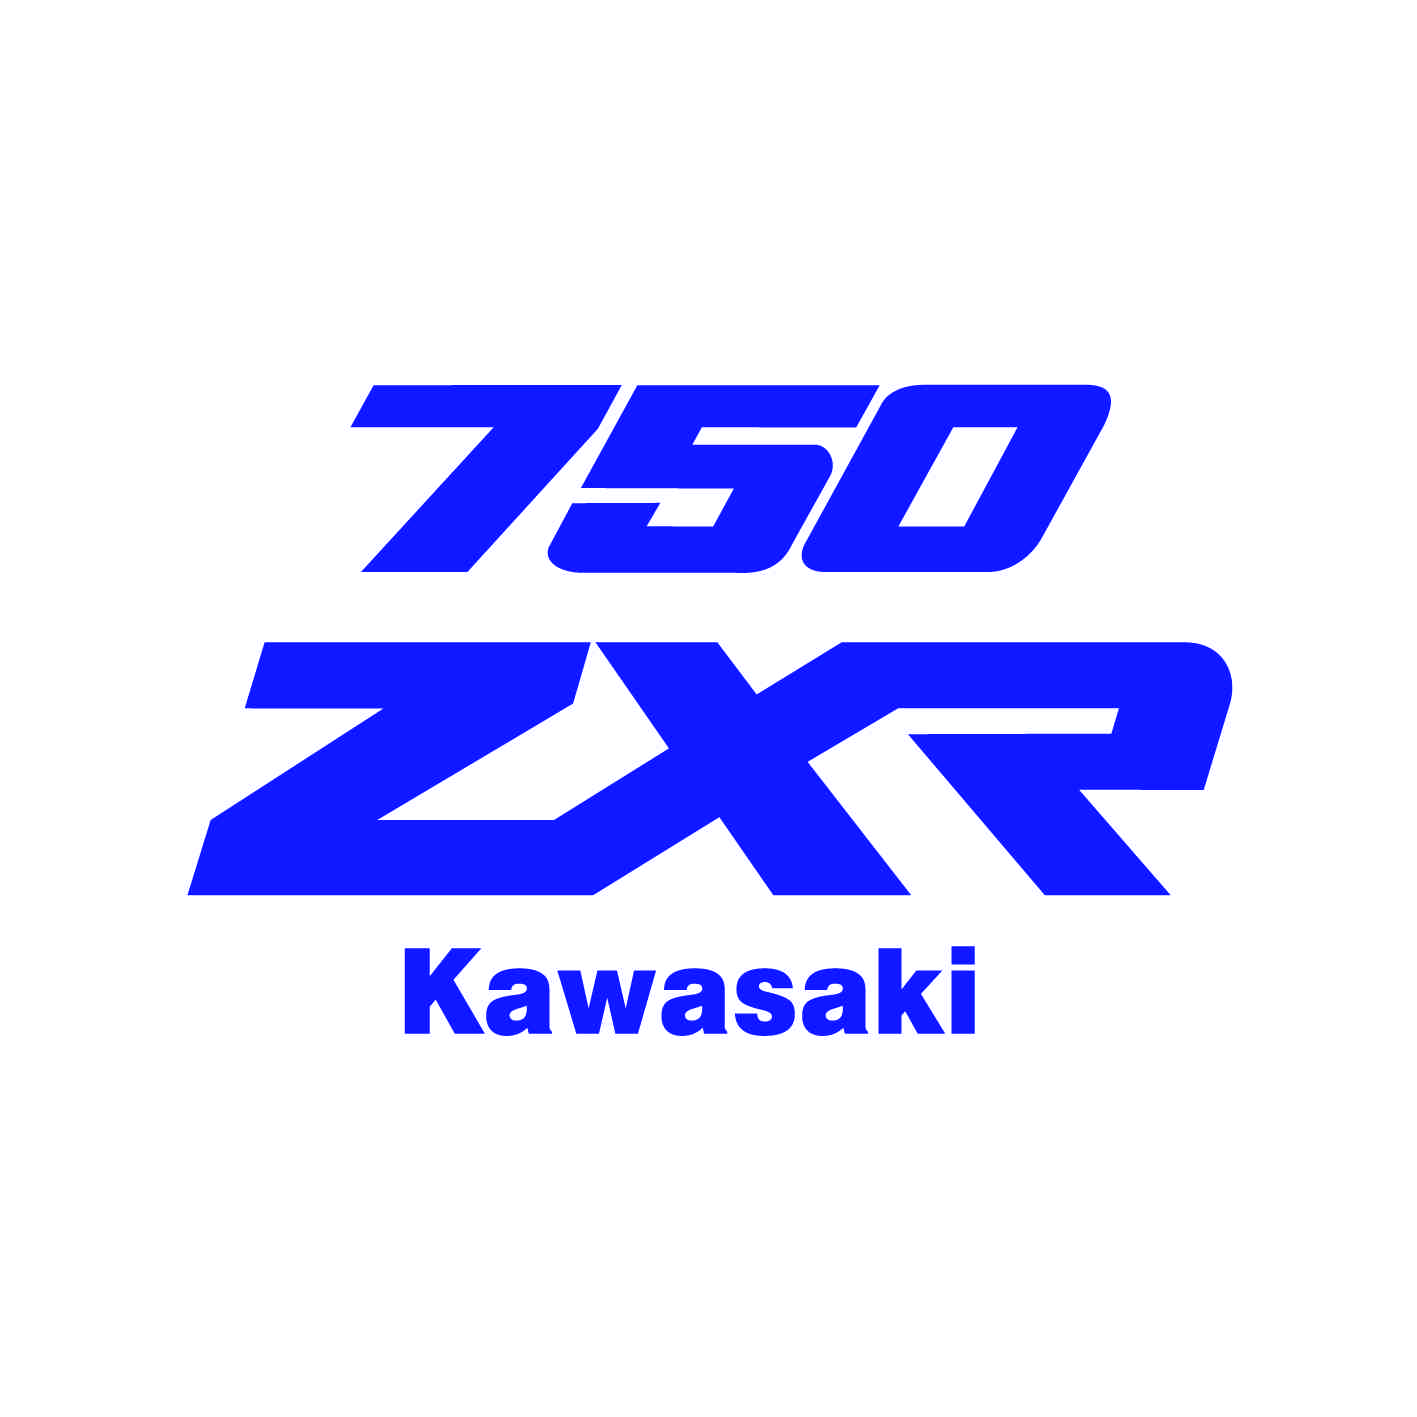 kawasaki-ref10-750-zxr-stickers-moto-casque-scooter-sticker-autocollant-adhesifs